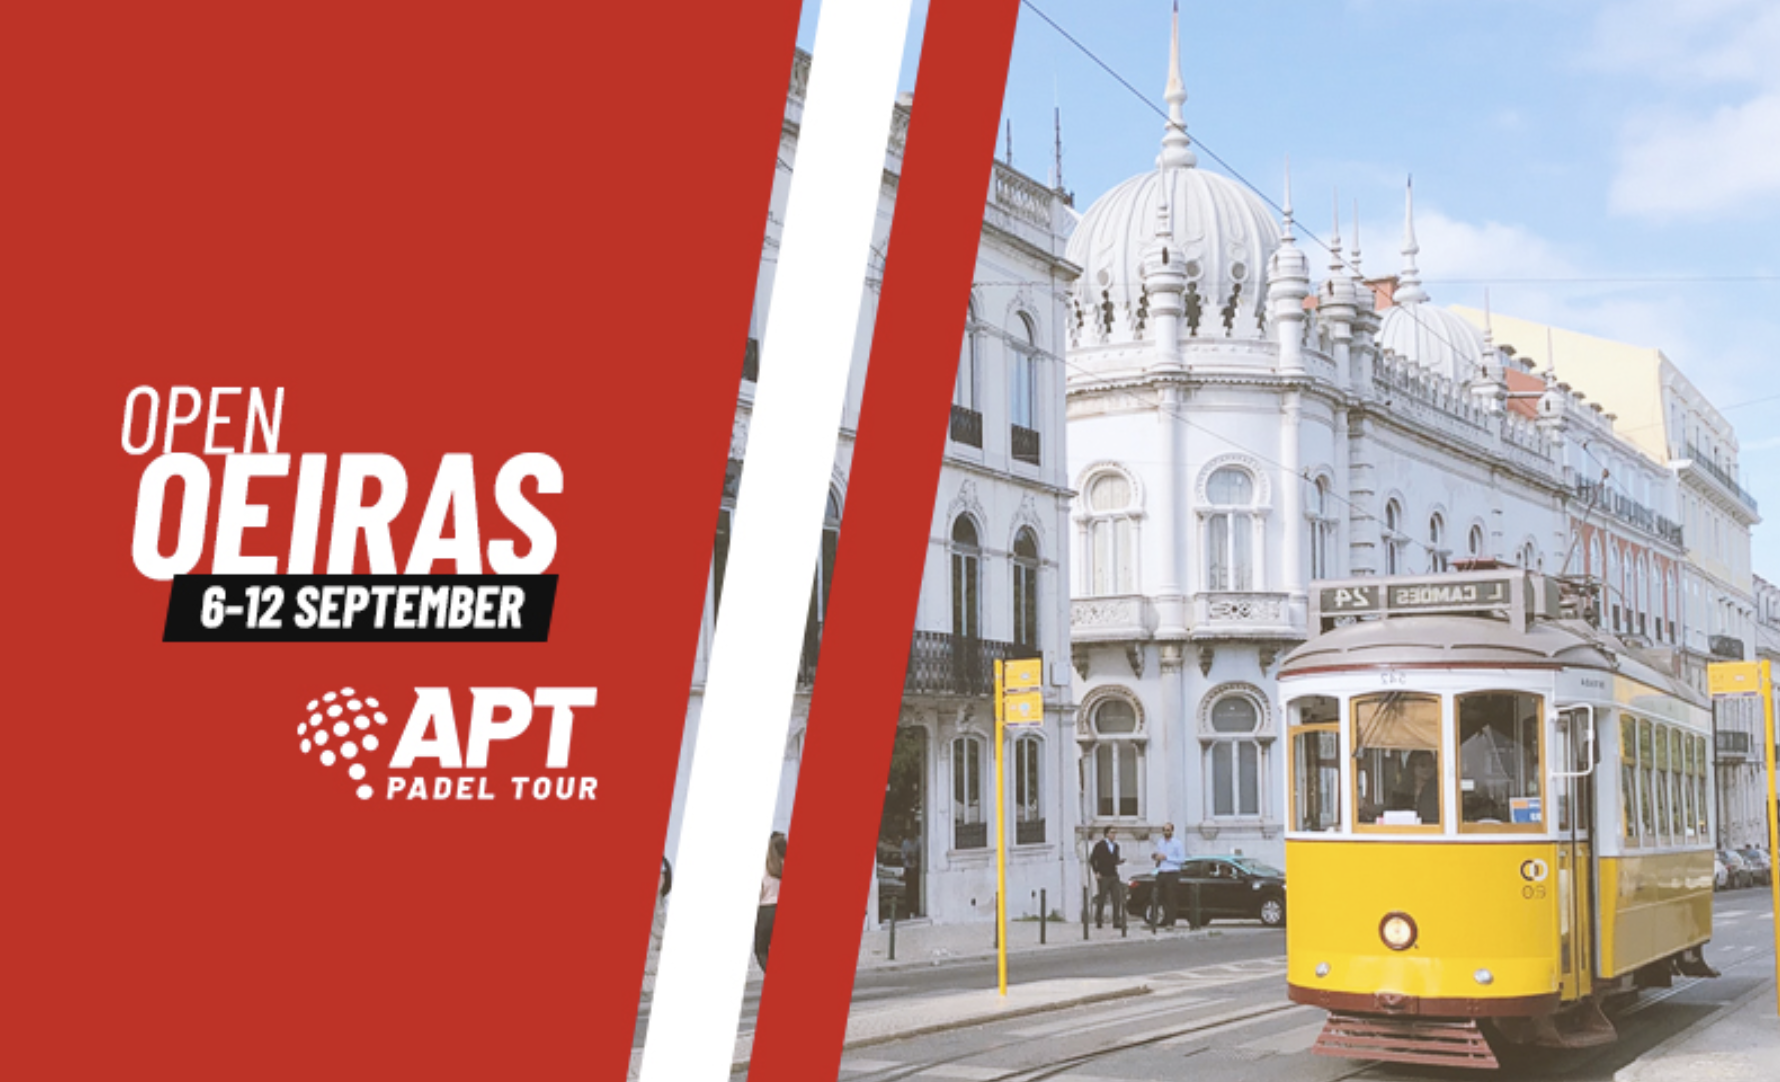 APT Padel Tour Oeiras Open: ¡las mesas están fuera!